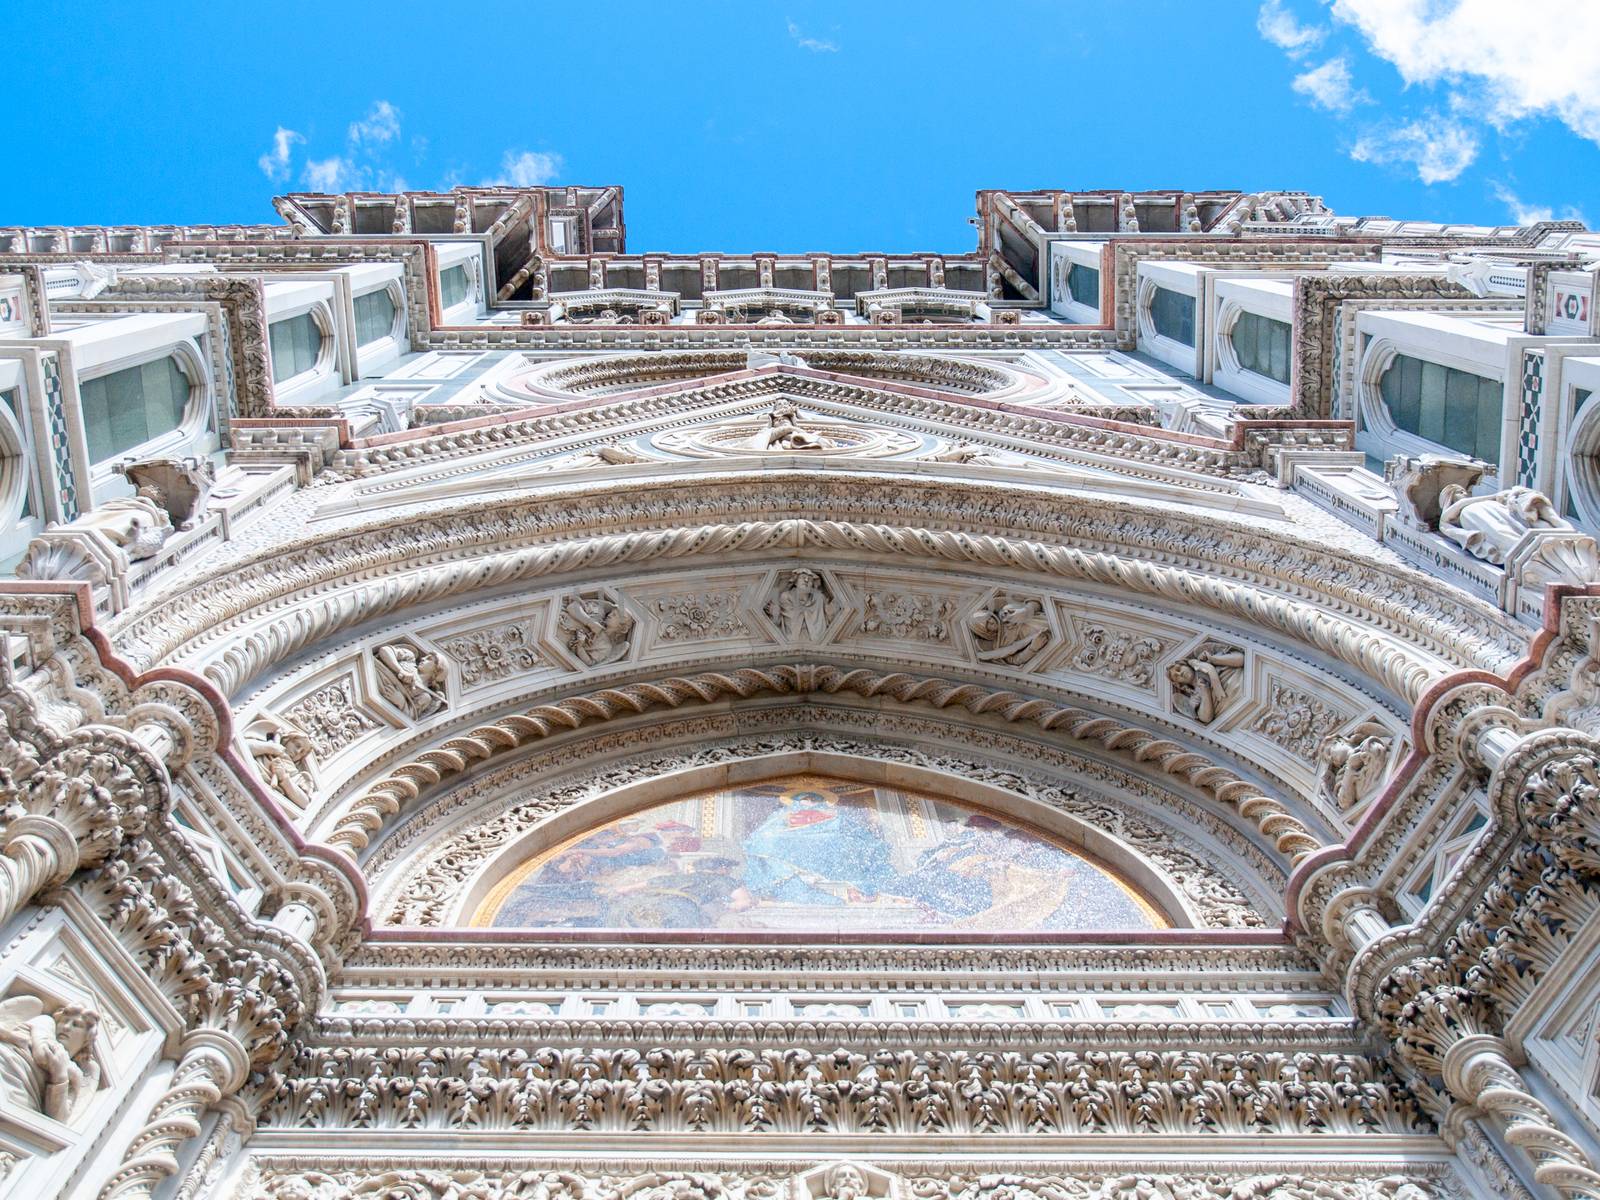 Main portal of Florence Catherdal, Cattedrale di Santa Maria del Fiore or Il Duomo di Firenze, with ornamental mosaic, Firenze, Tuscany, Italy.